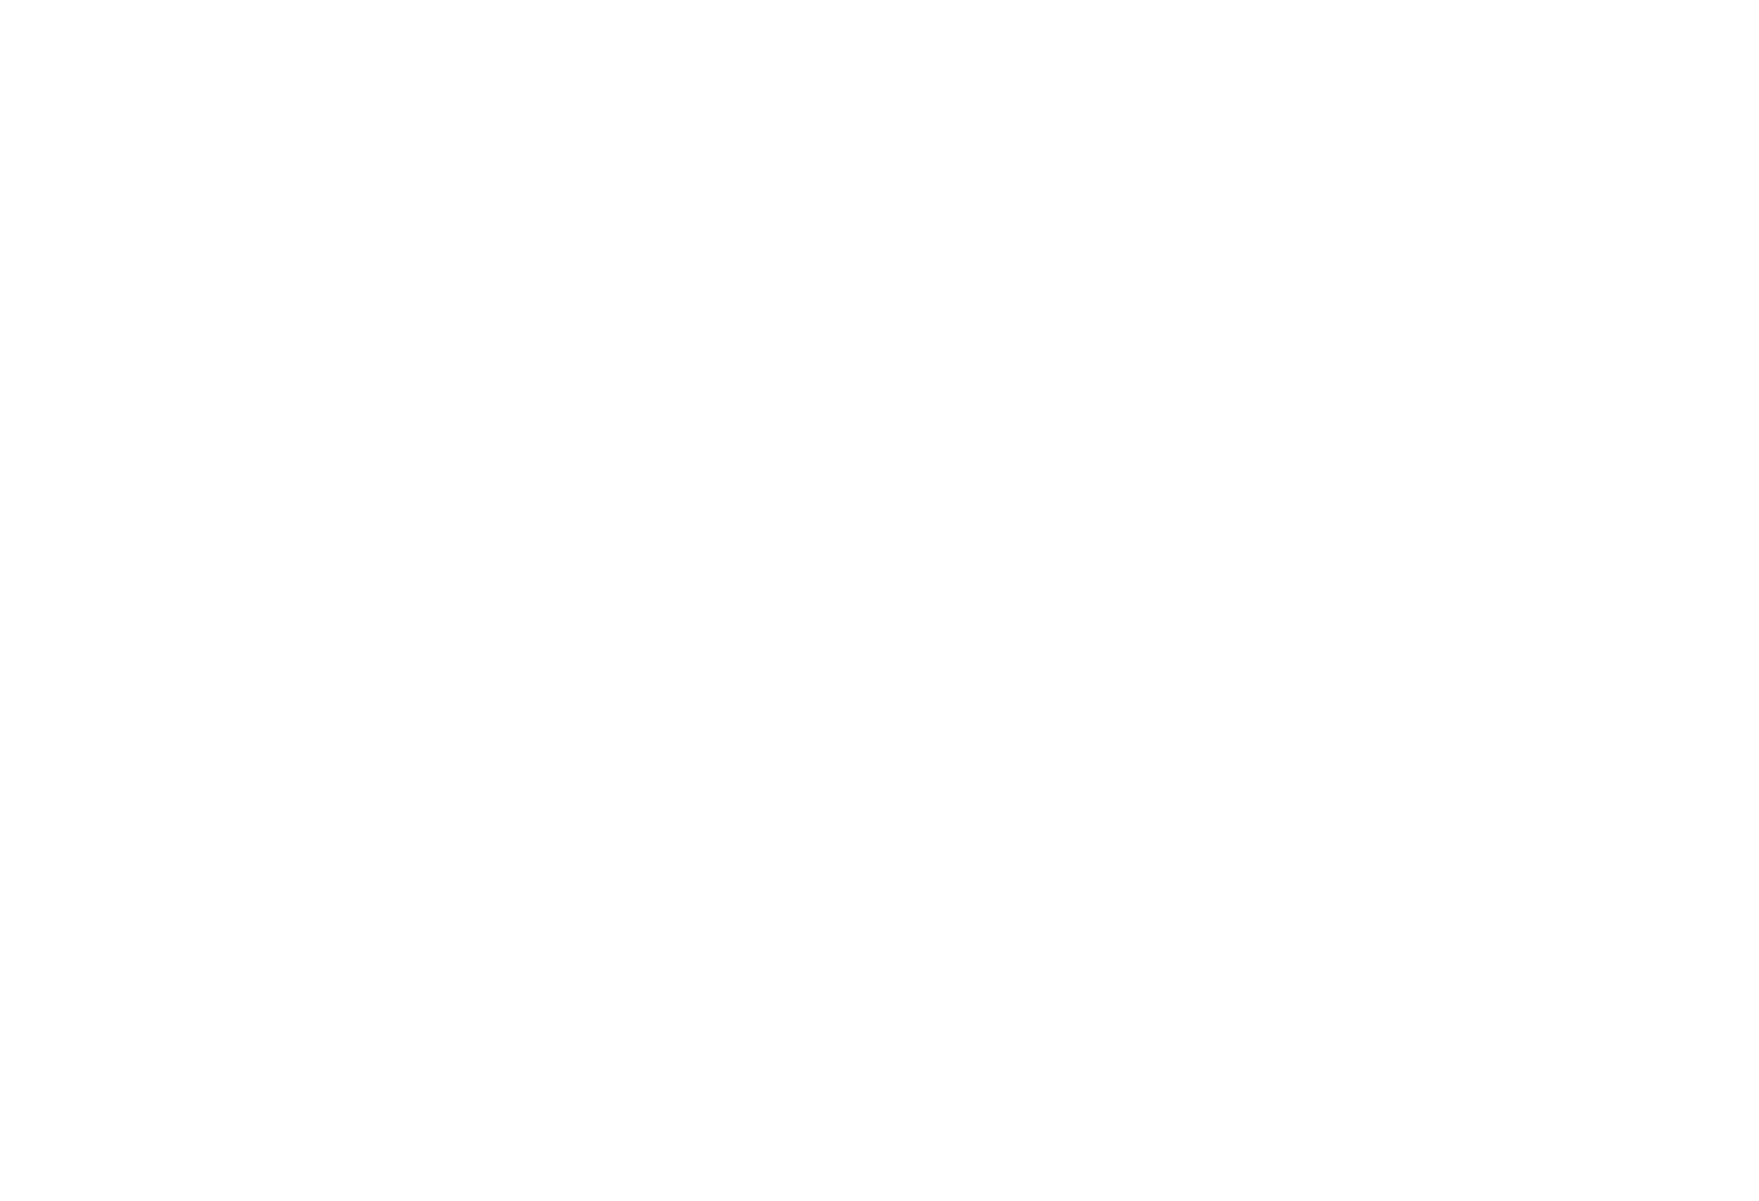 GPCE Sydney